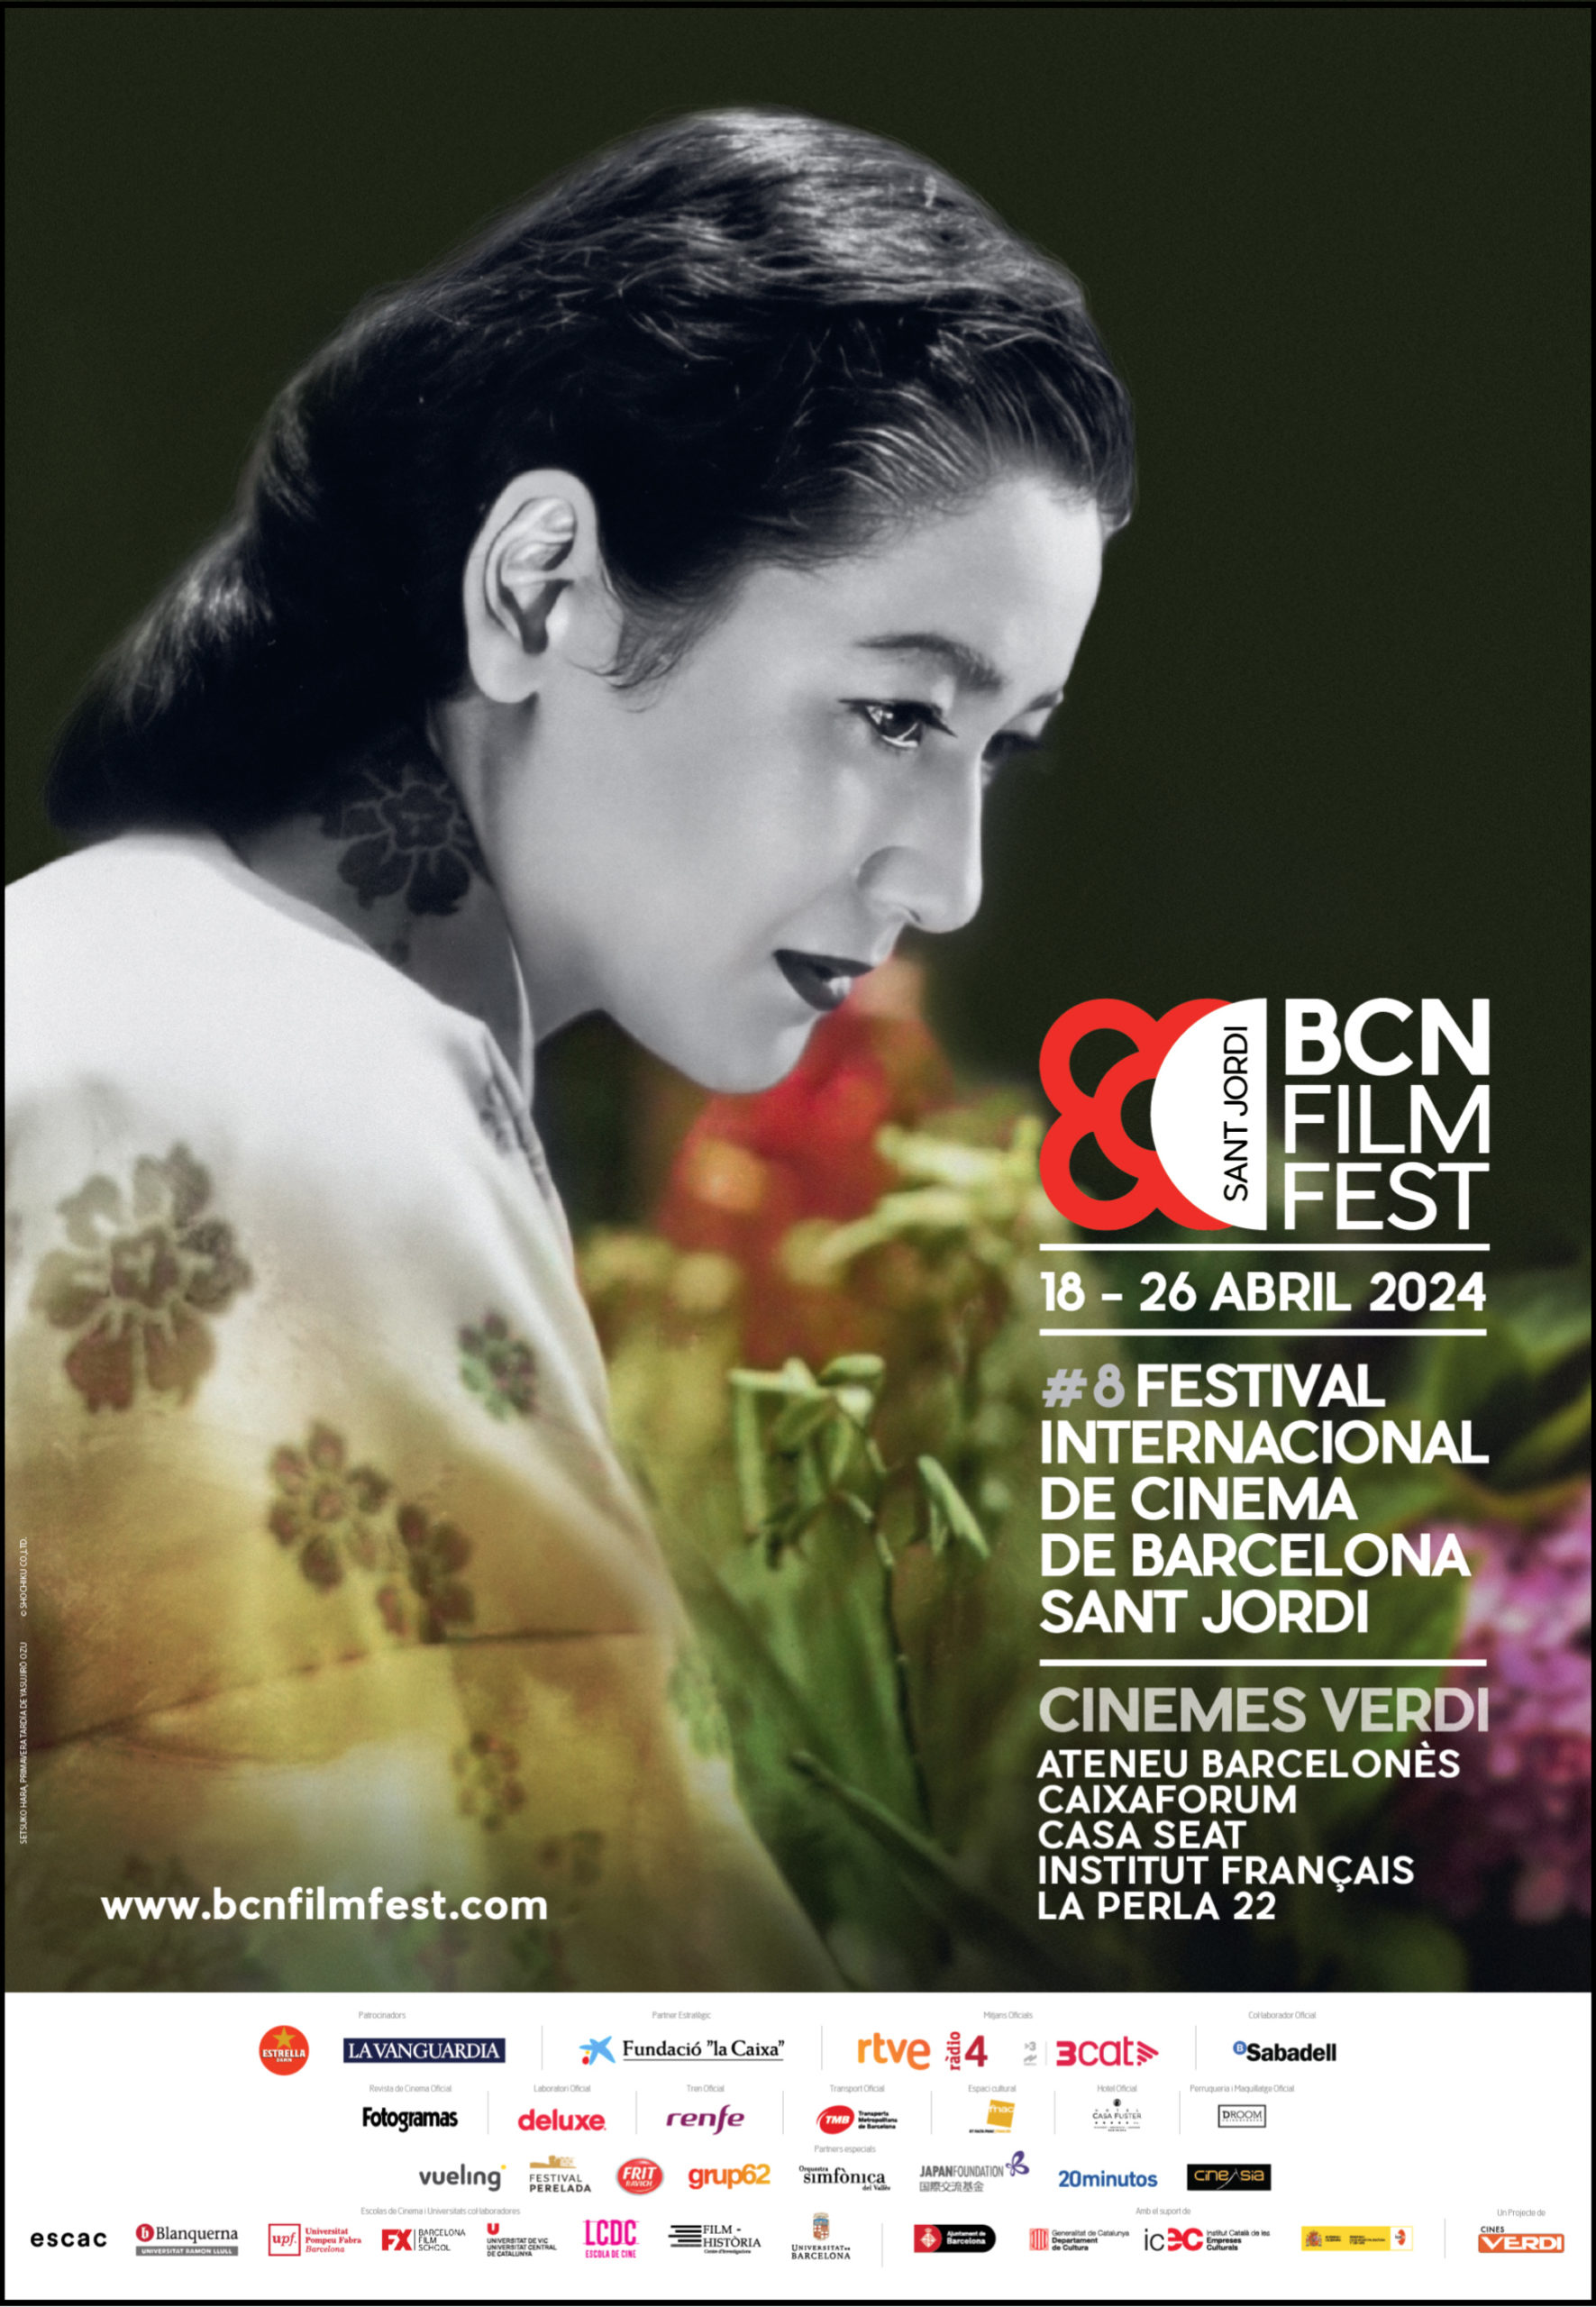 BCN Film fest 2024: Cartel Oficial, homenaje a Yasujirô Ozu